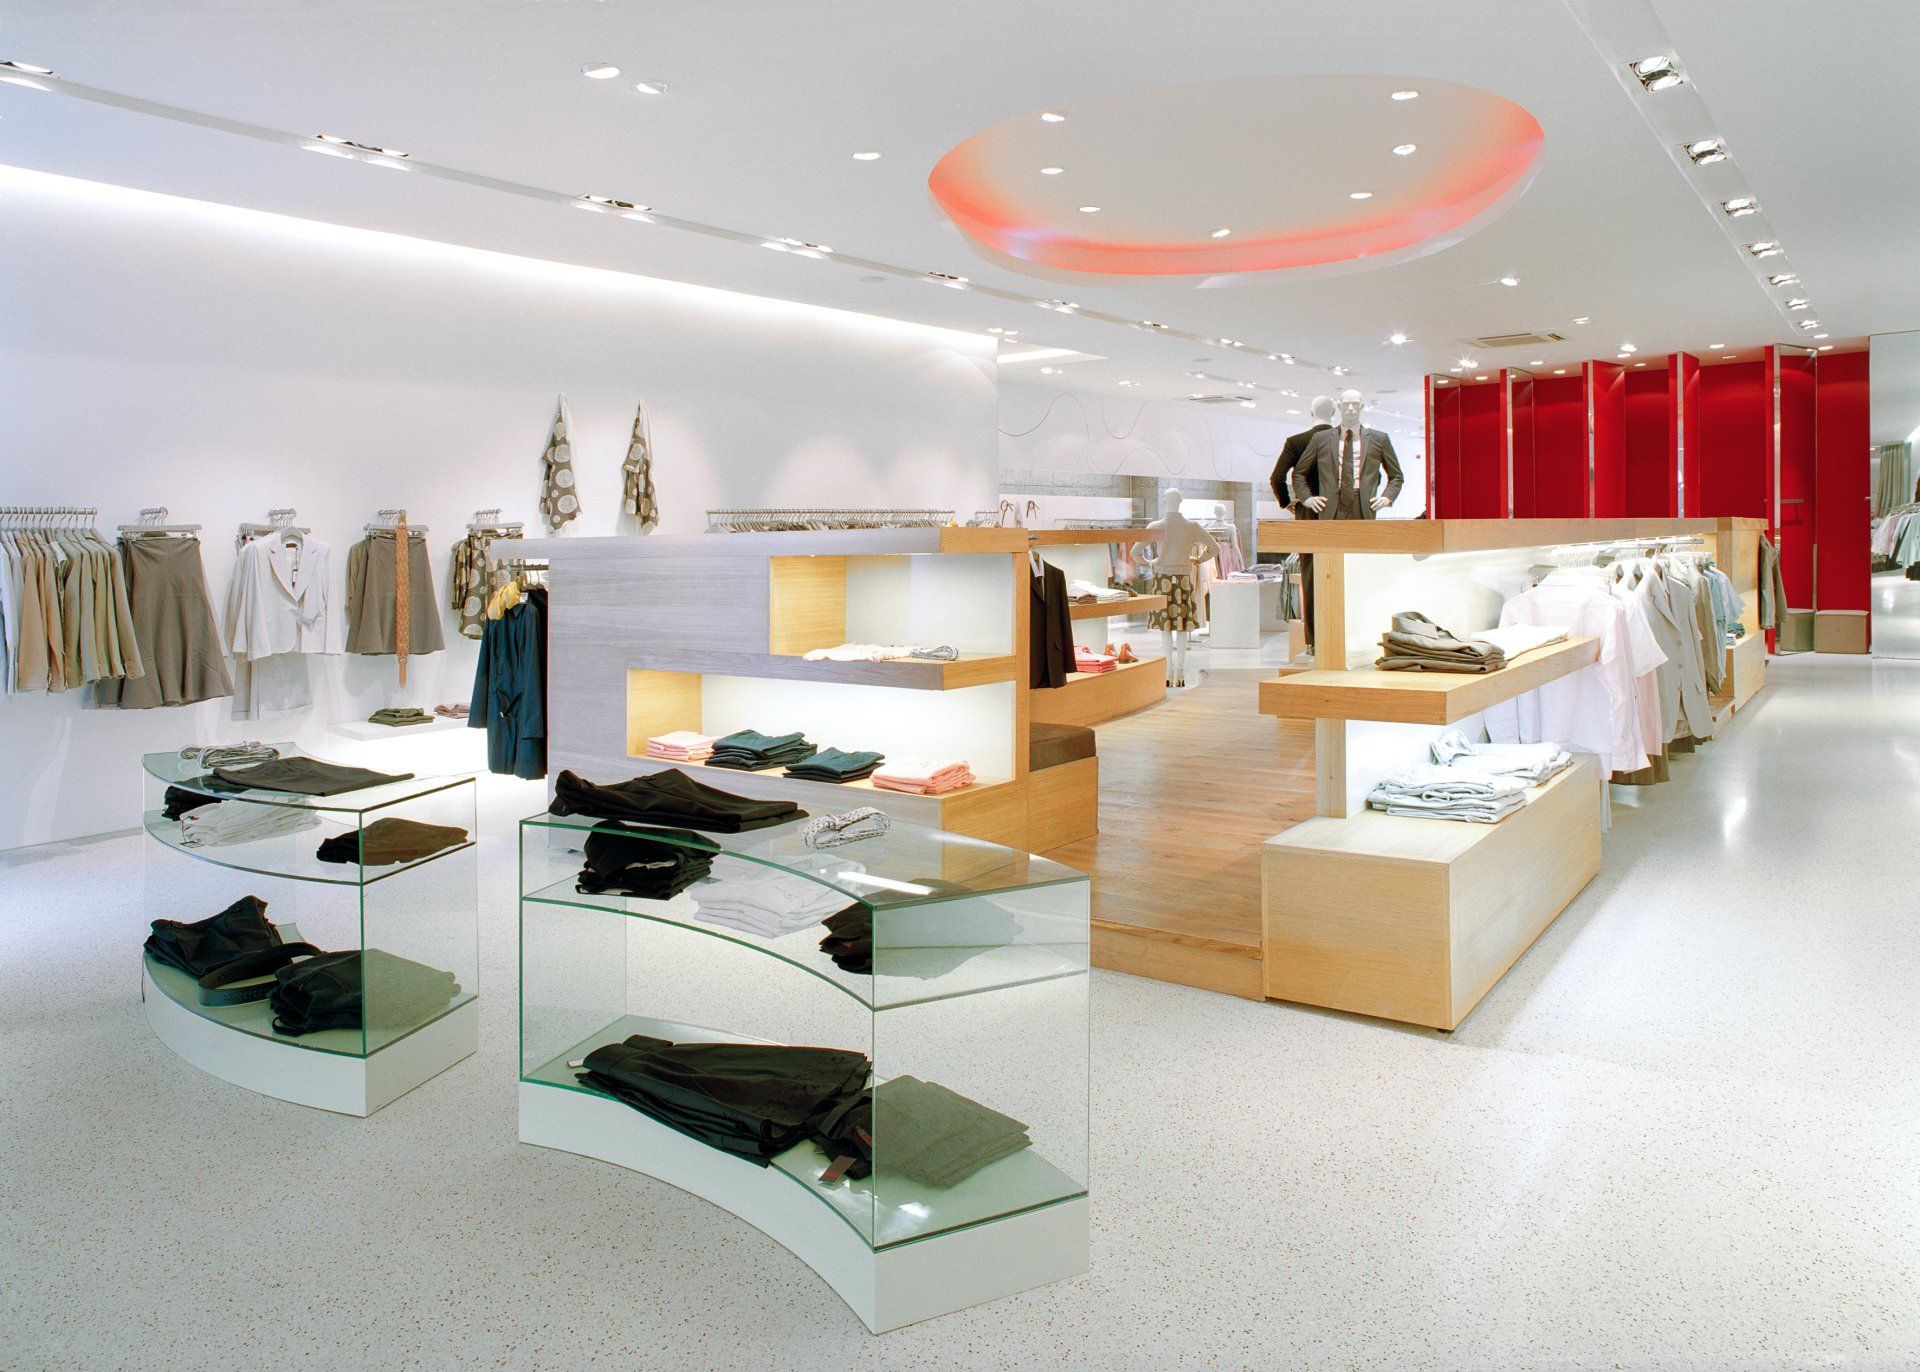 Interior of the 'Reiss' fashion store designed by 'Dublin Design Studio'